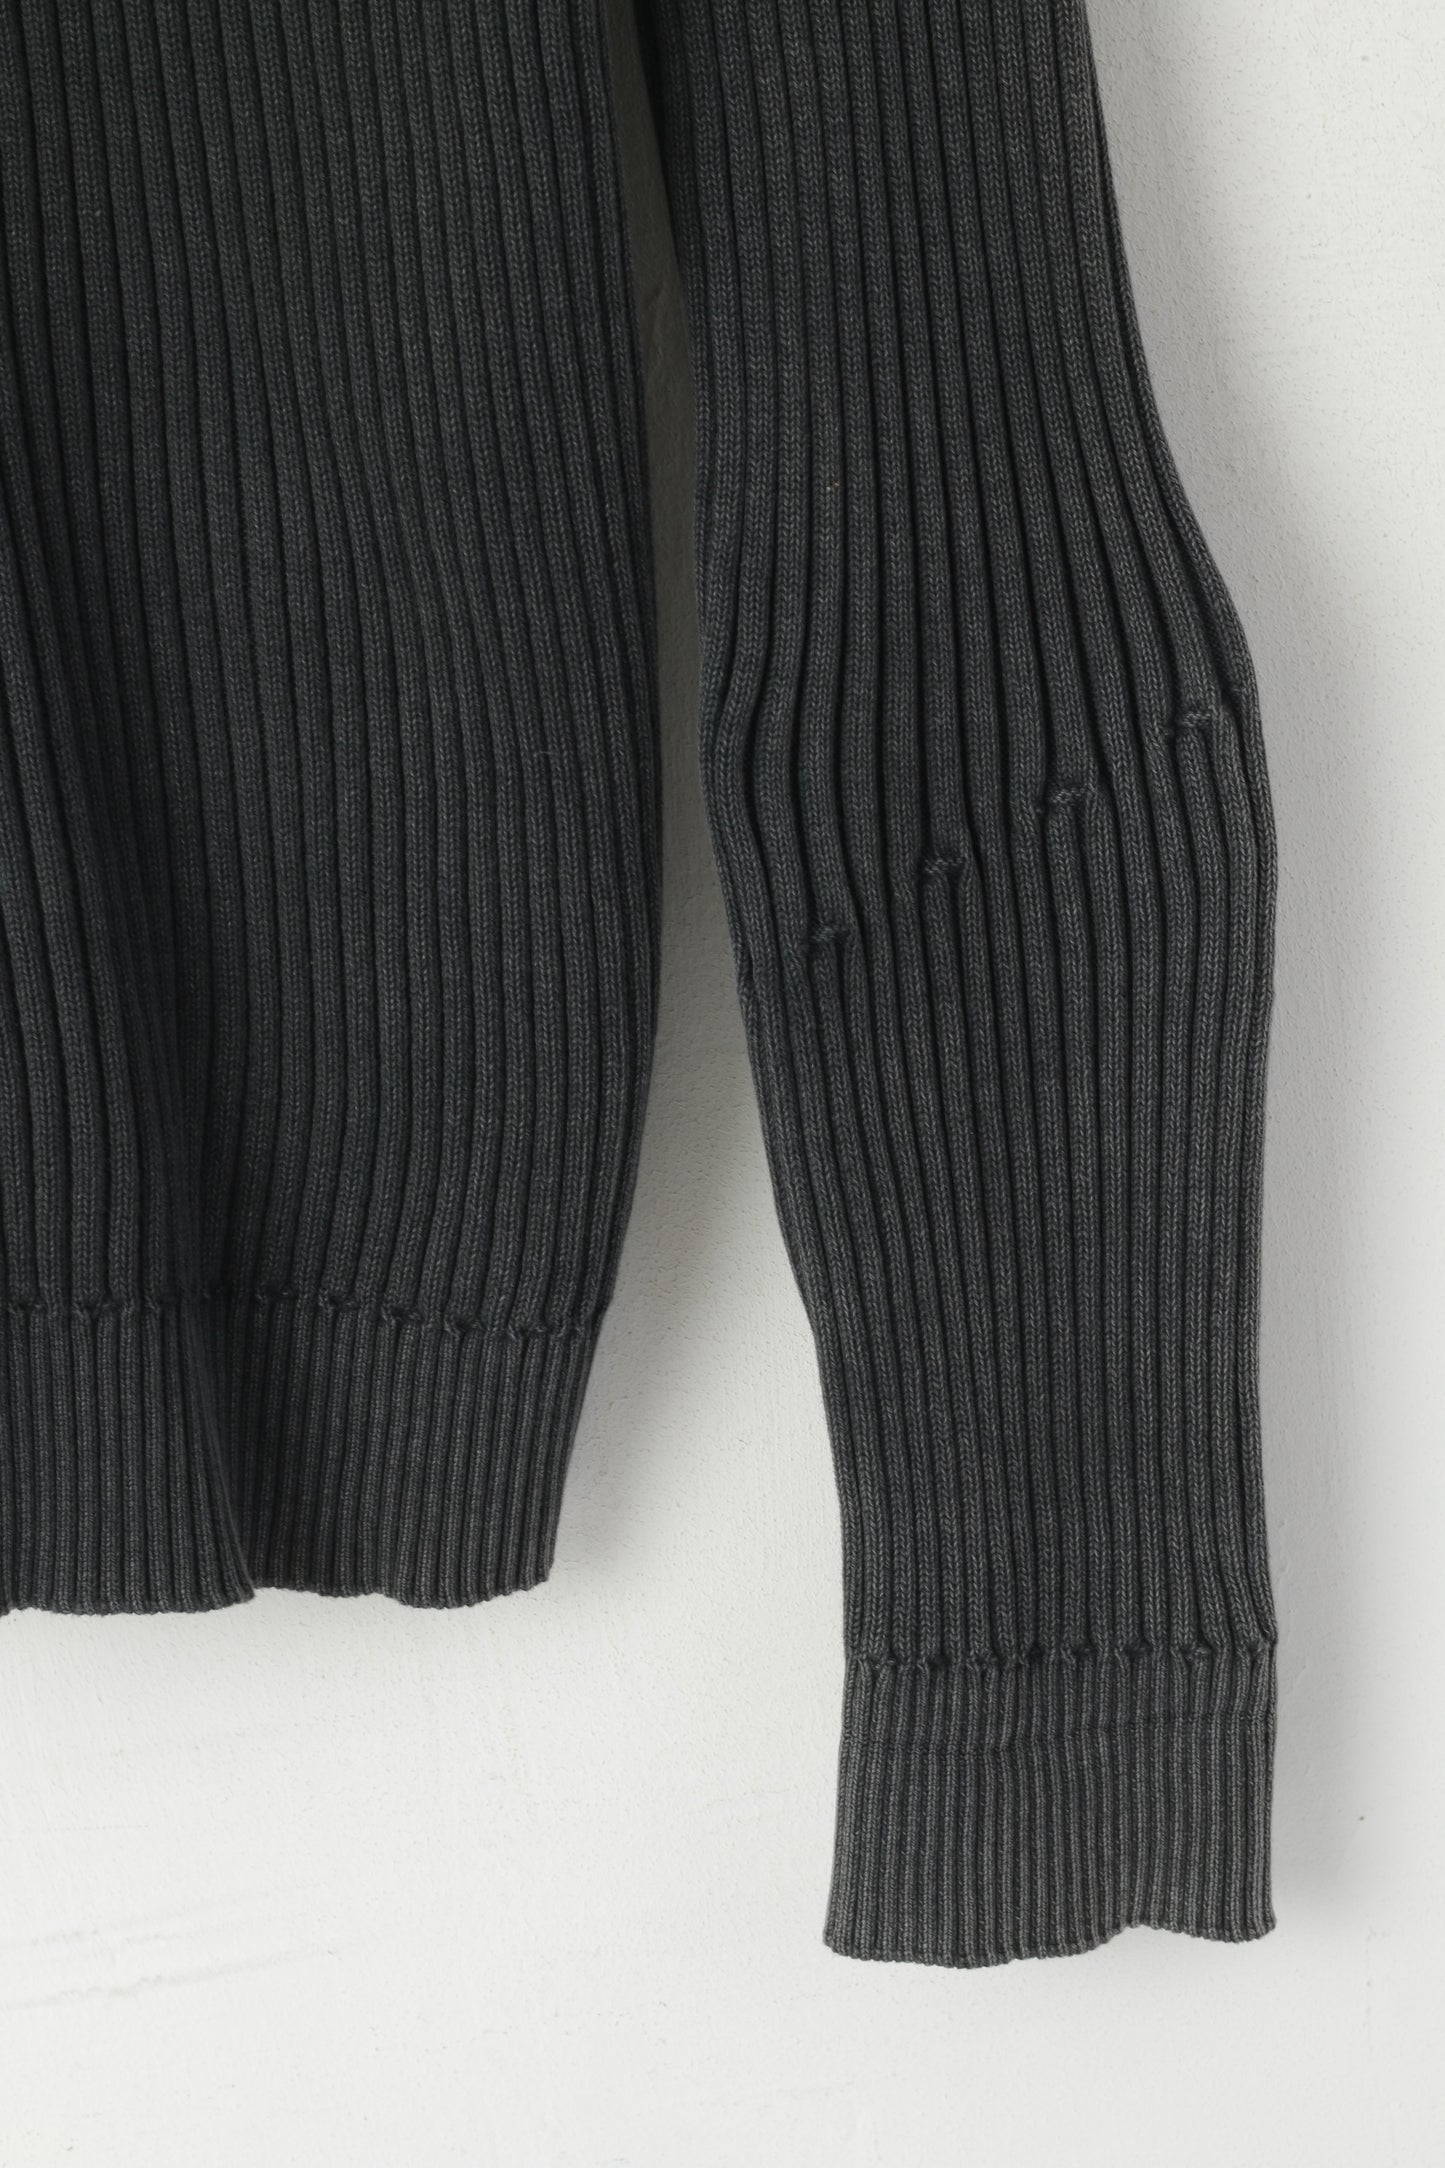 Calvin Klein Jeans Men XXL (XL) Cardigan Gray Faded Vintage Cotton Zip Up Stretch Sweater